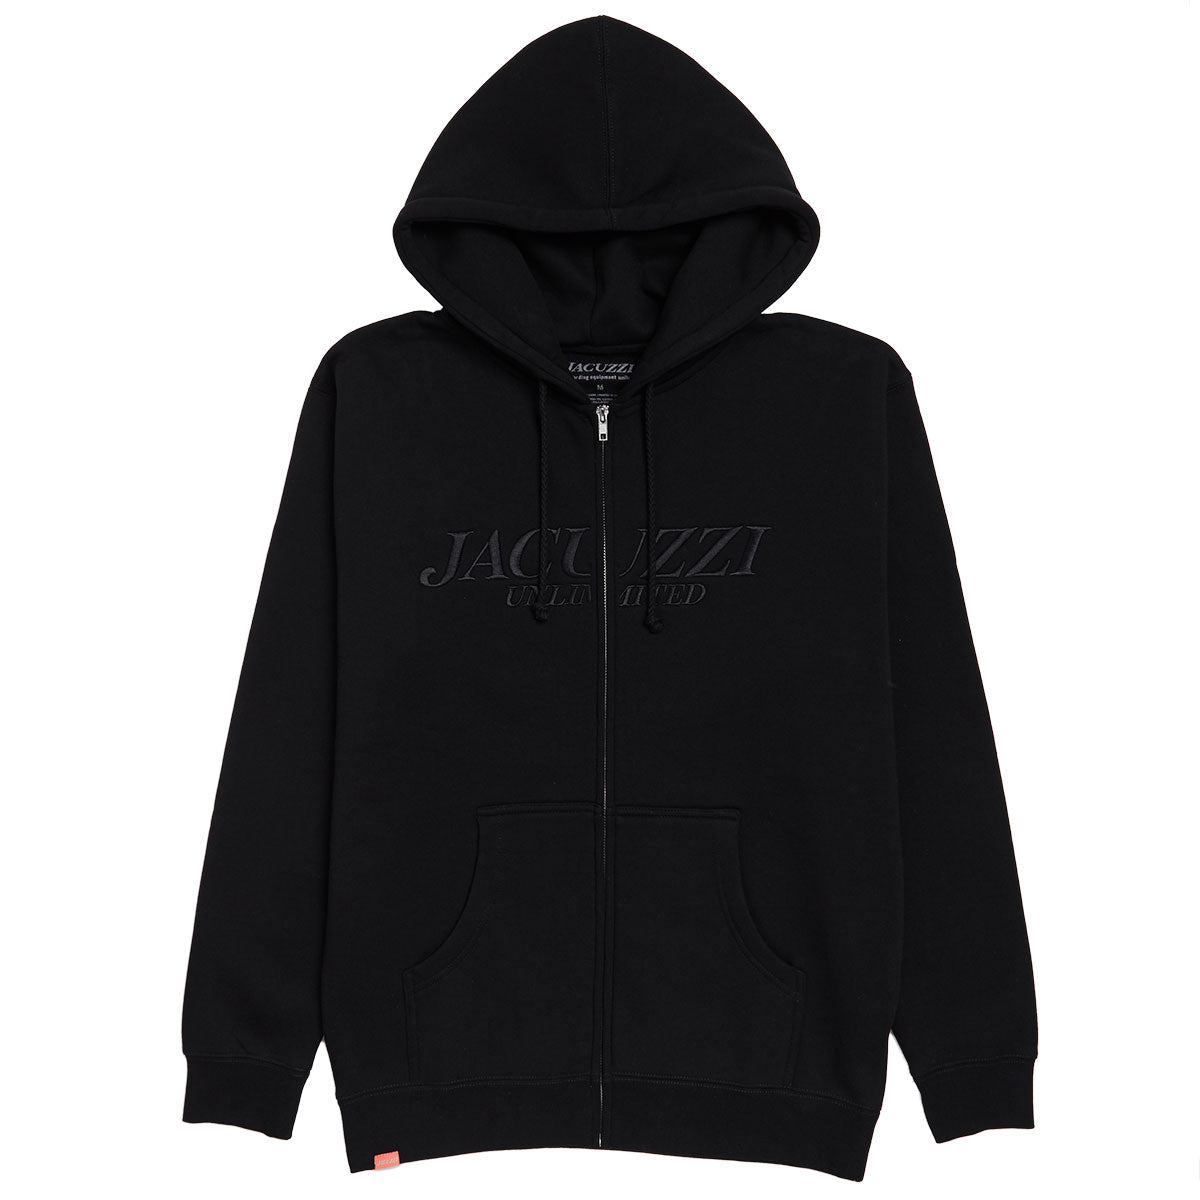 Jacuzzi Flavor Embroidered Zip Up Hoodie - Black image 1